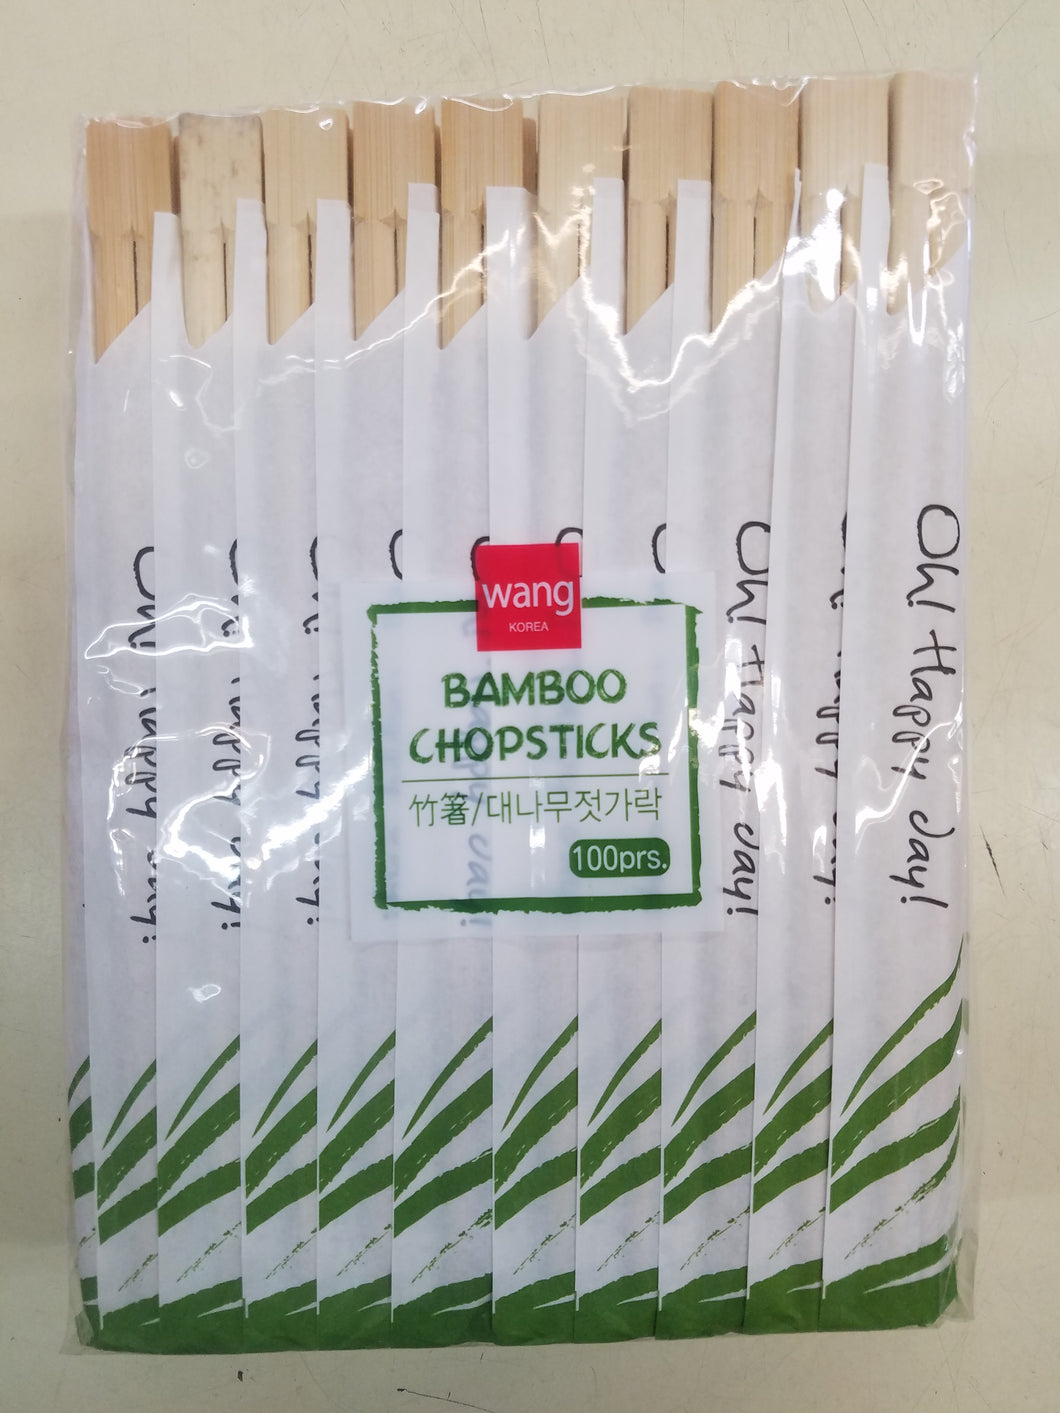 Wang Bamboo Chopsticks (100 pairs)